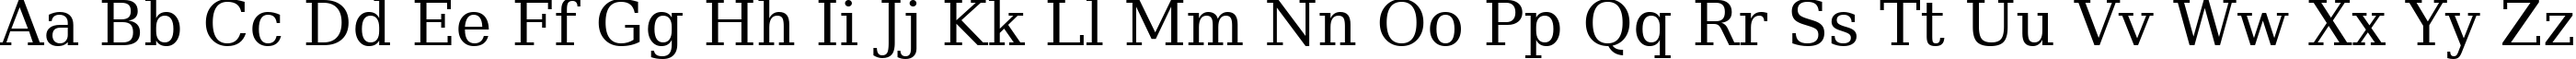 Пример написания английского алфавита шрифтом ae_Shado